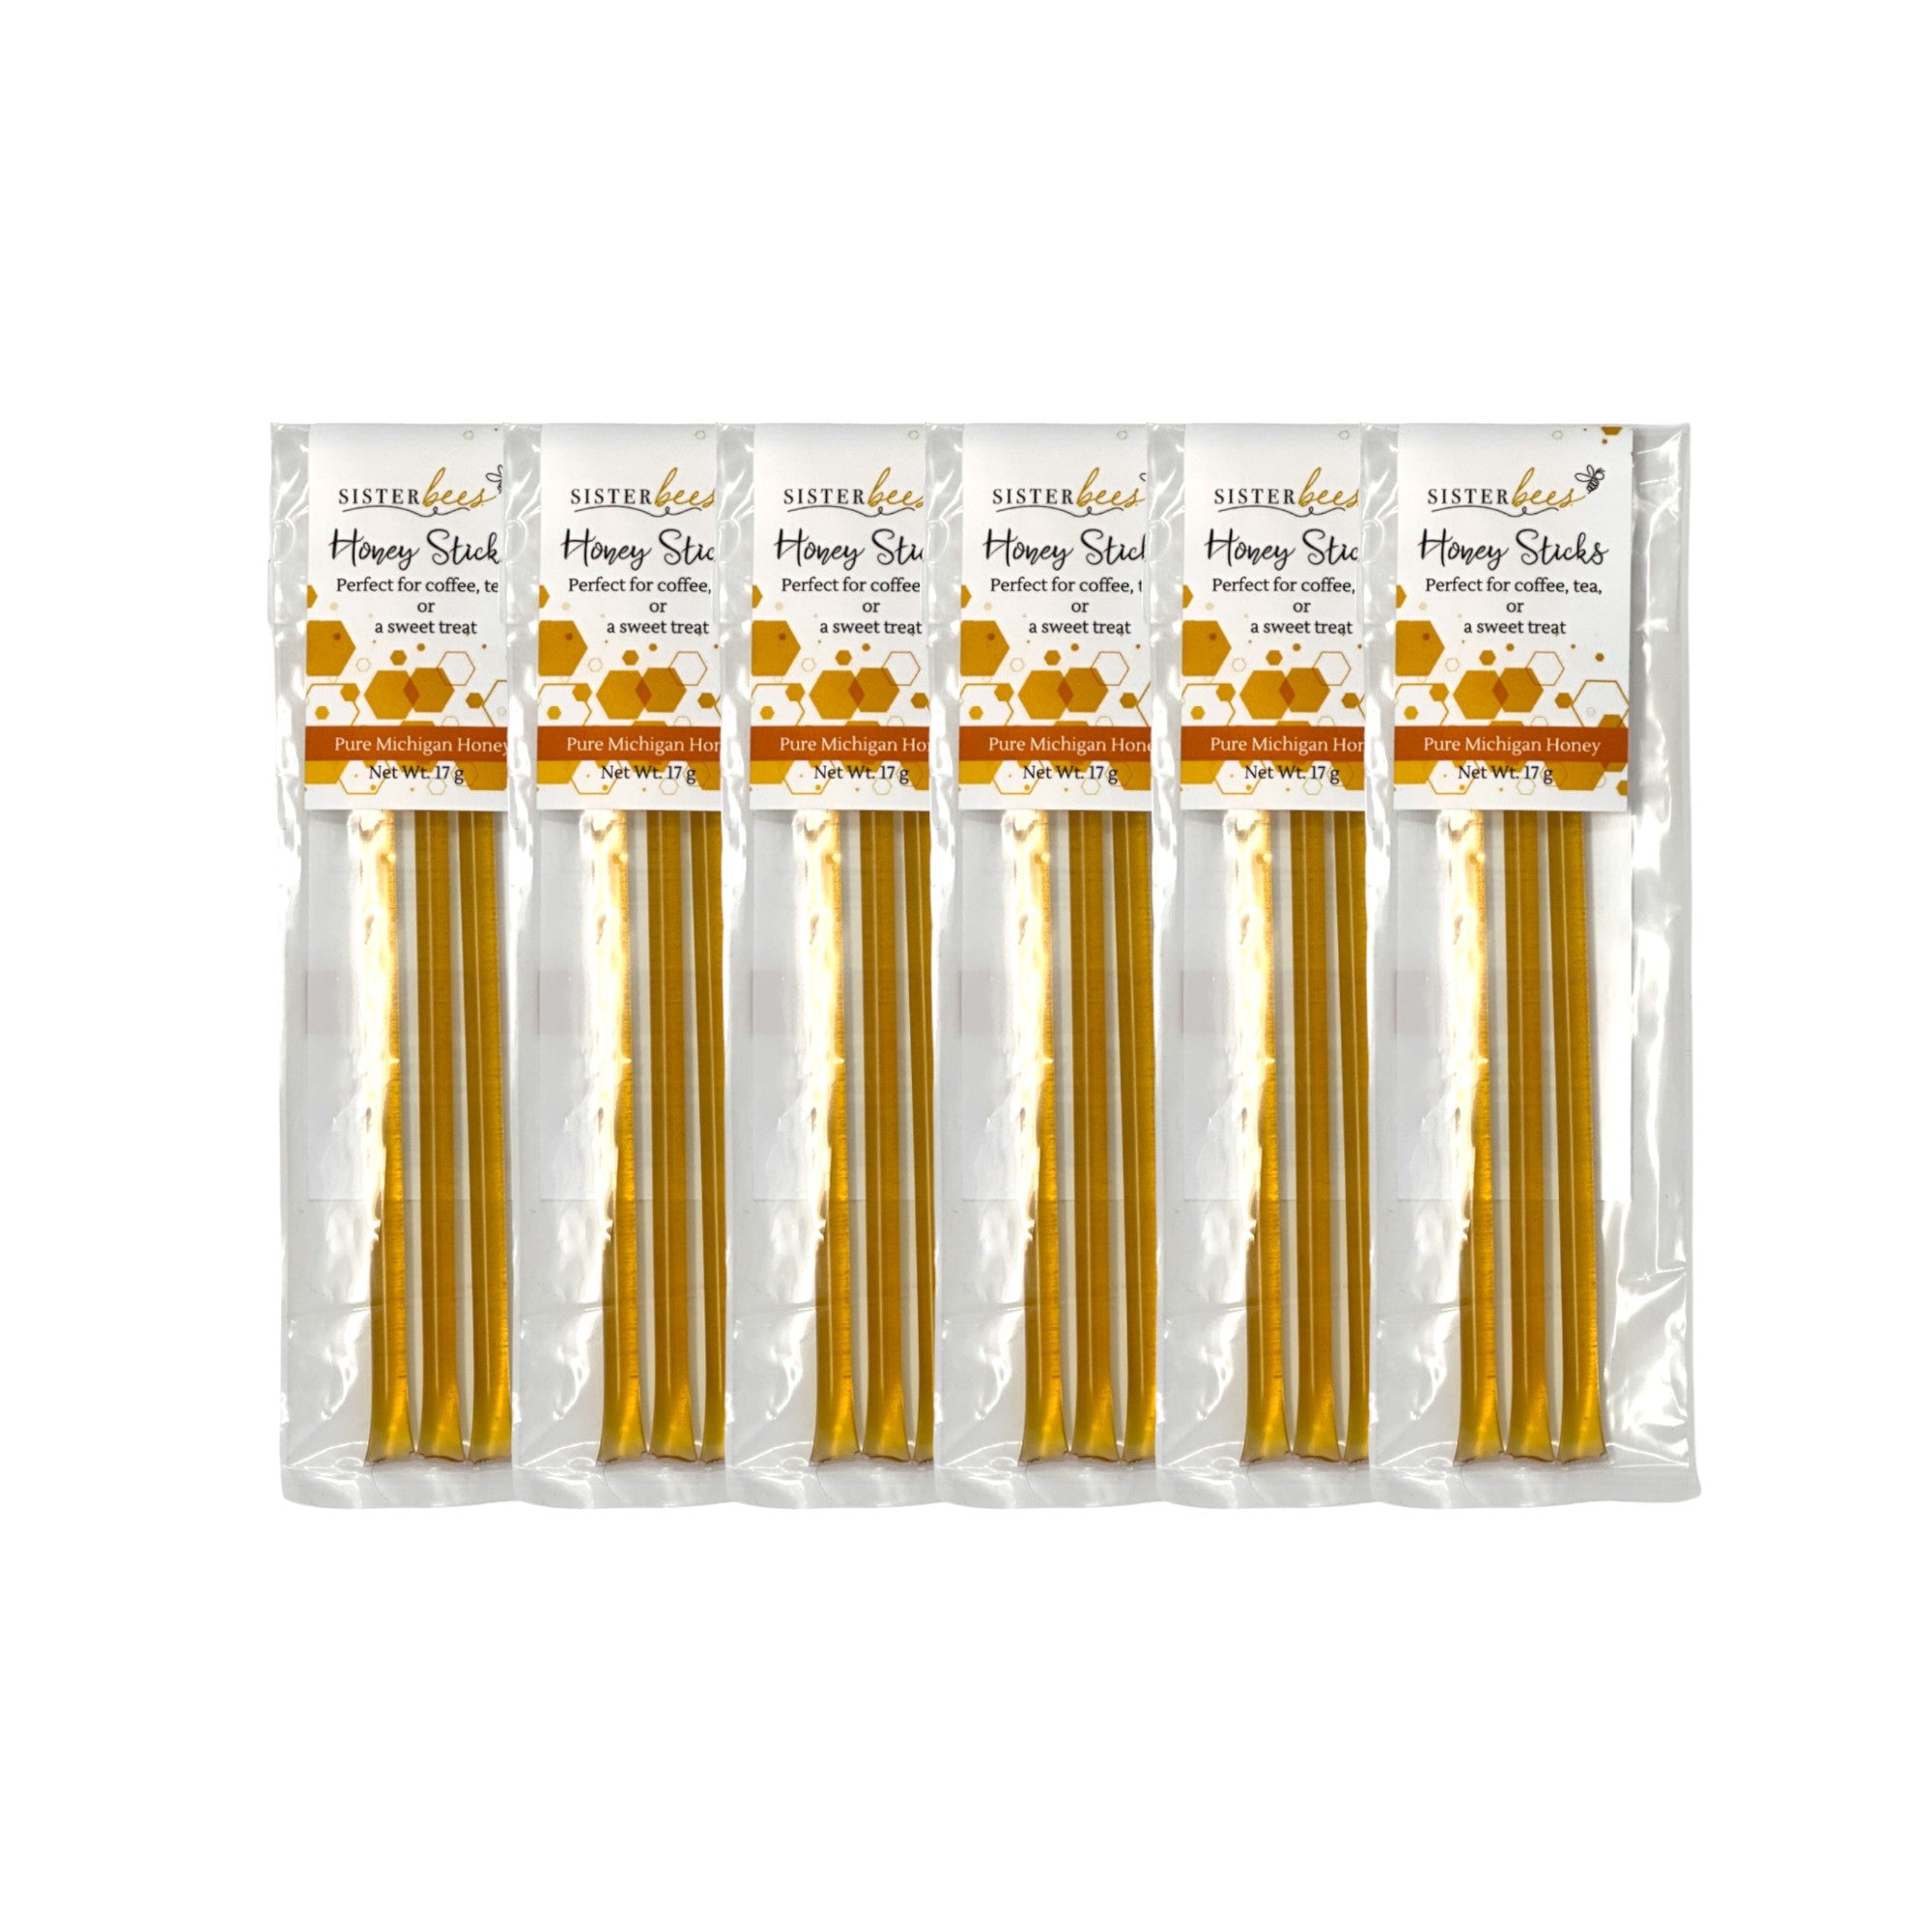 Honey Sticks - 3 Stick Pack.